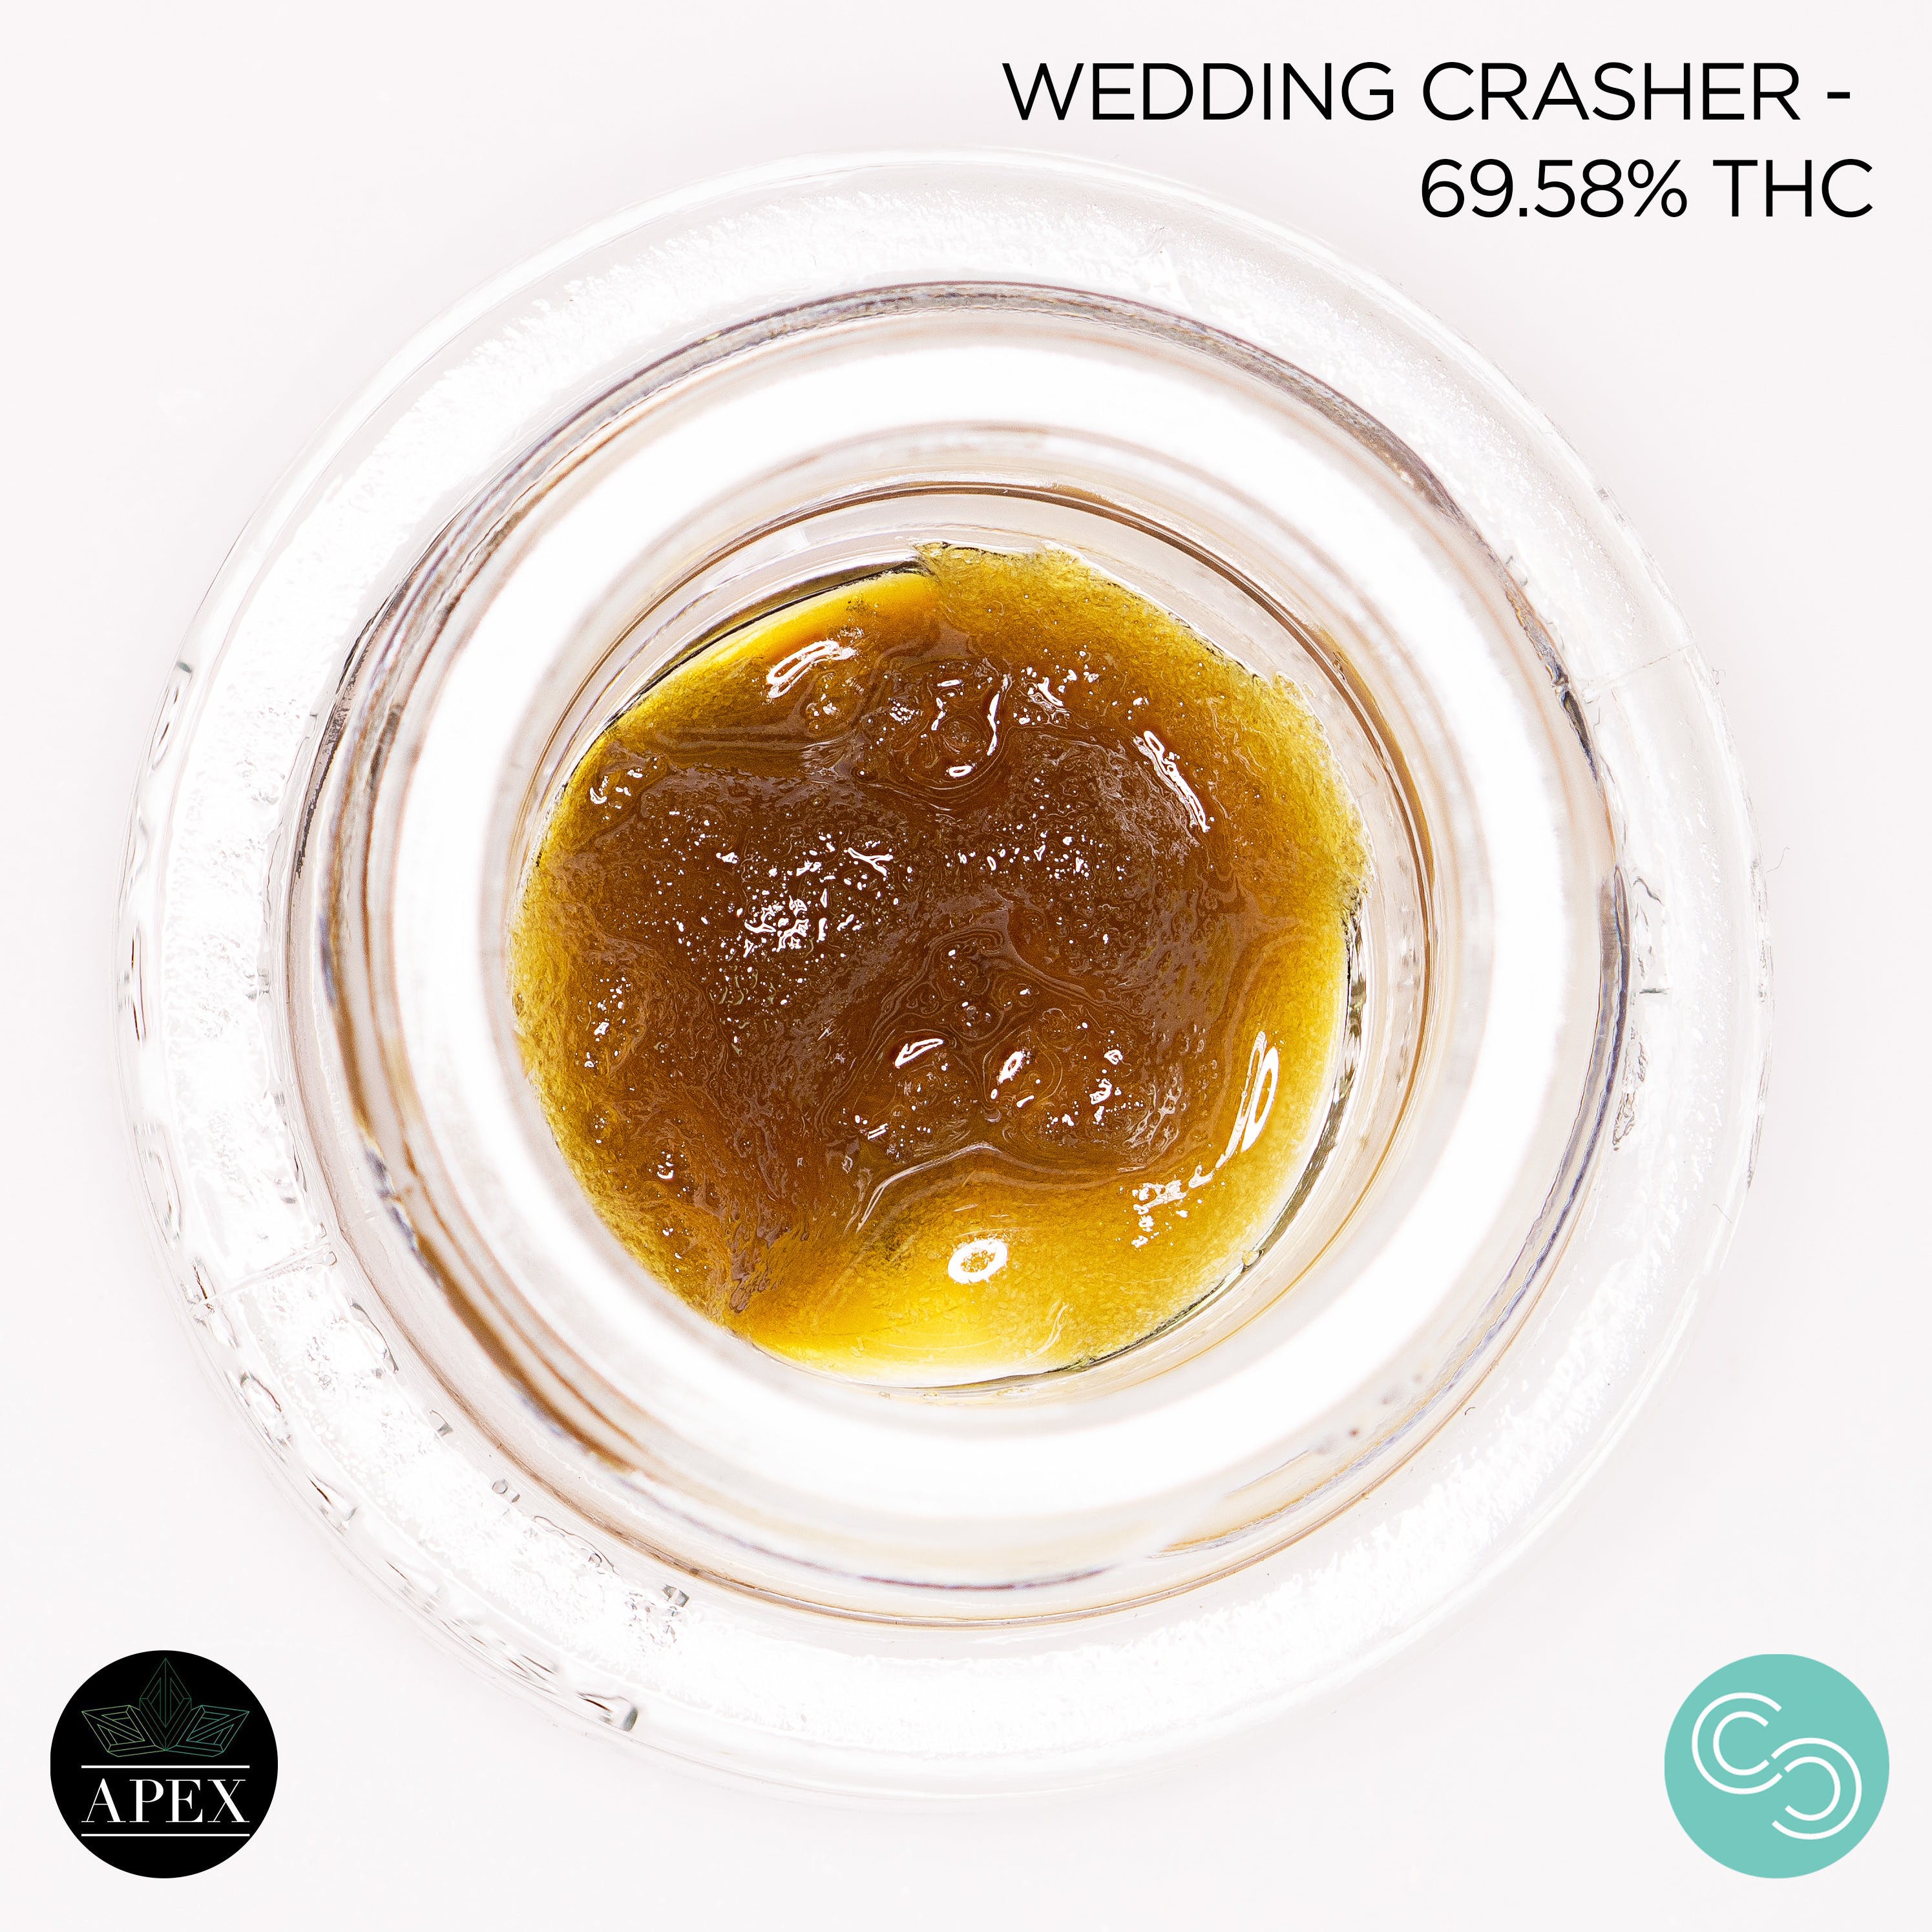 Apex - Wedding Crasher - 69.58% THC